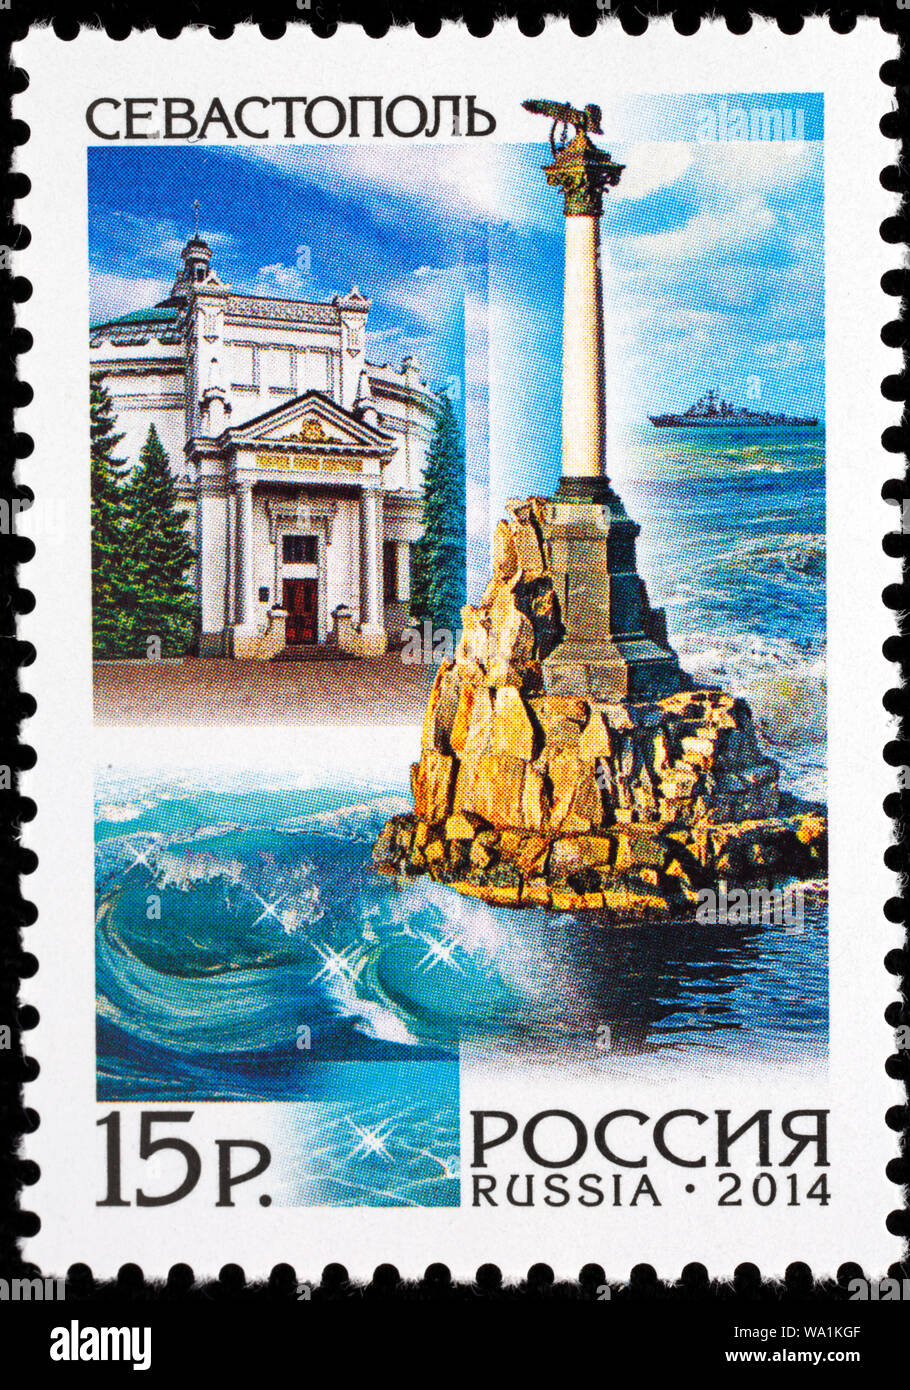 Sevastopol, Crimea, postage stamp, Russia, 2014 Stock Photo